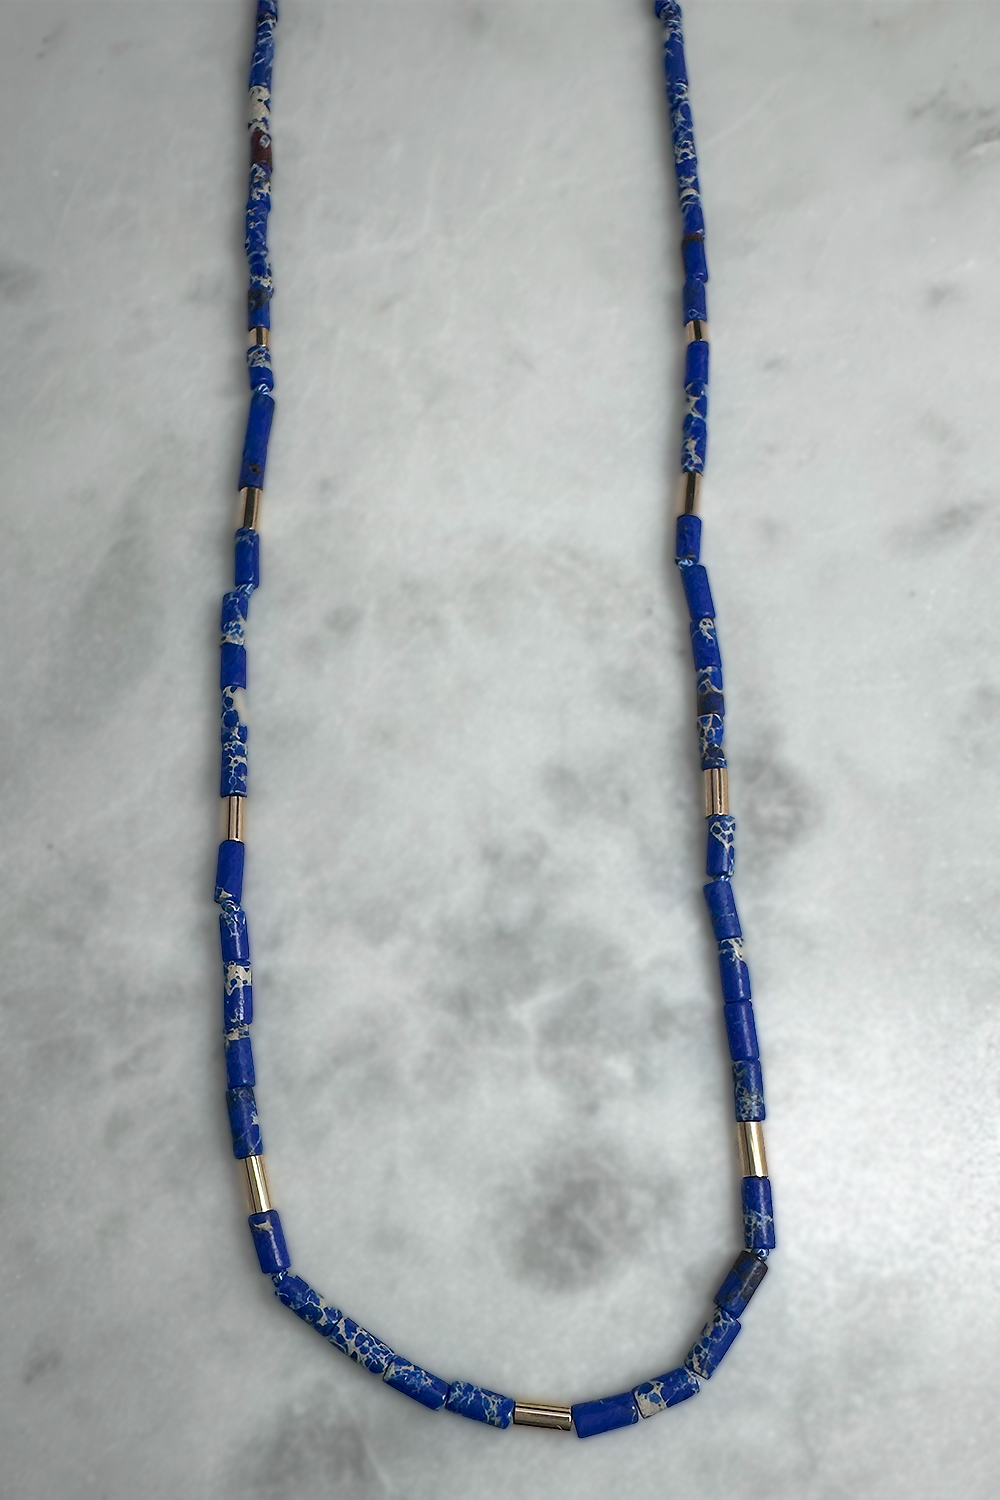 juju gems jewellery imperial jasper and gold bead necklace